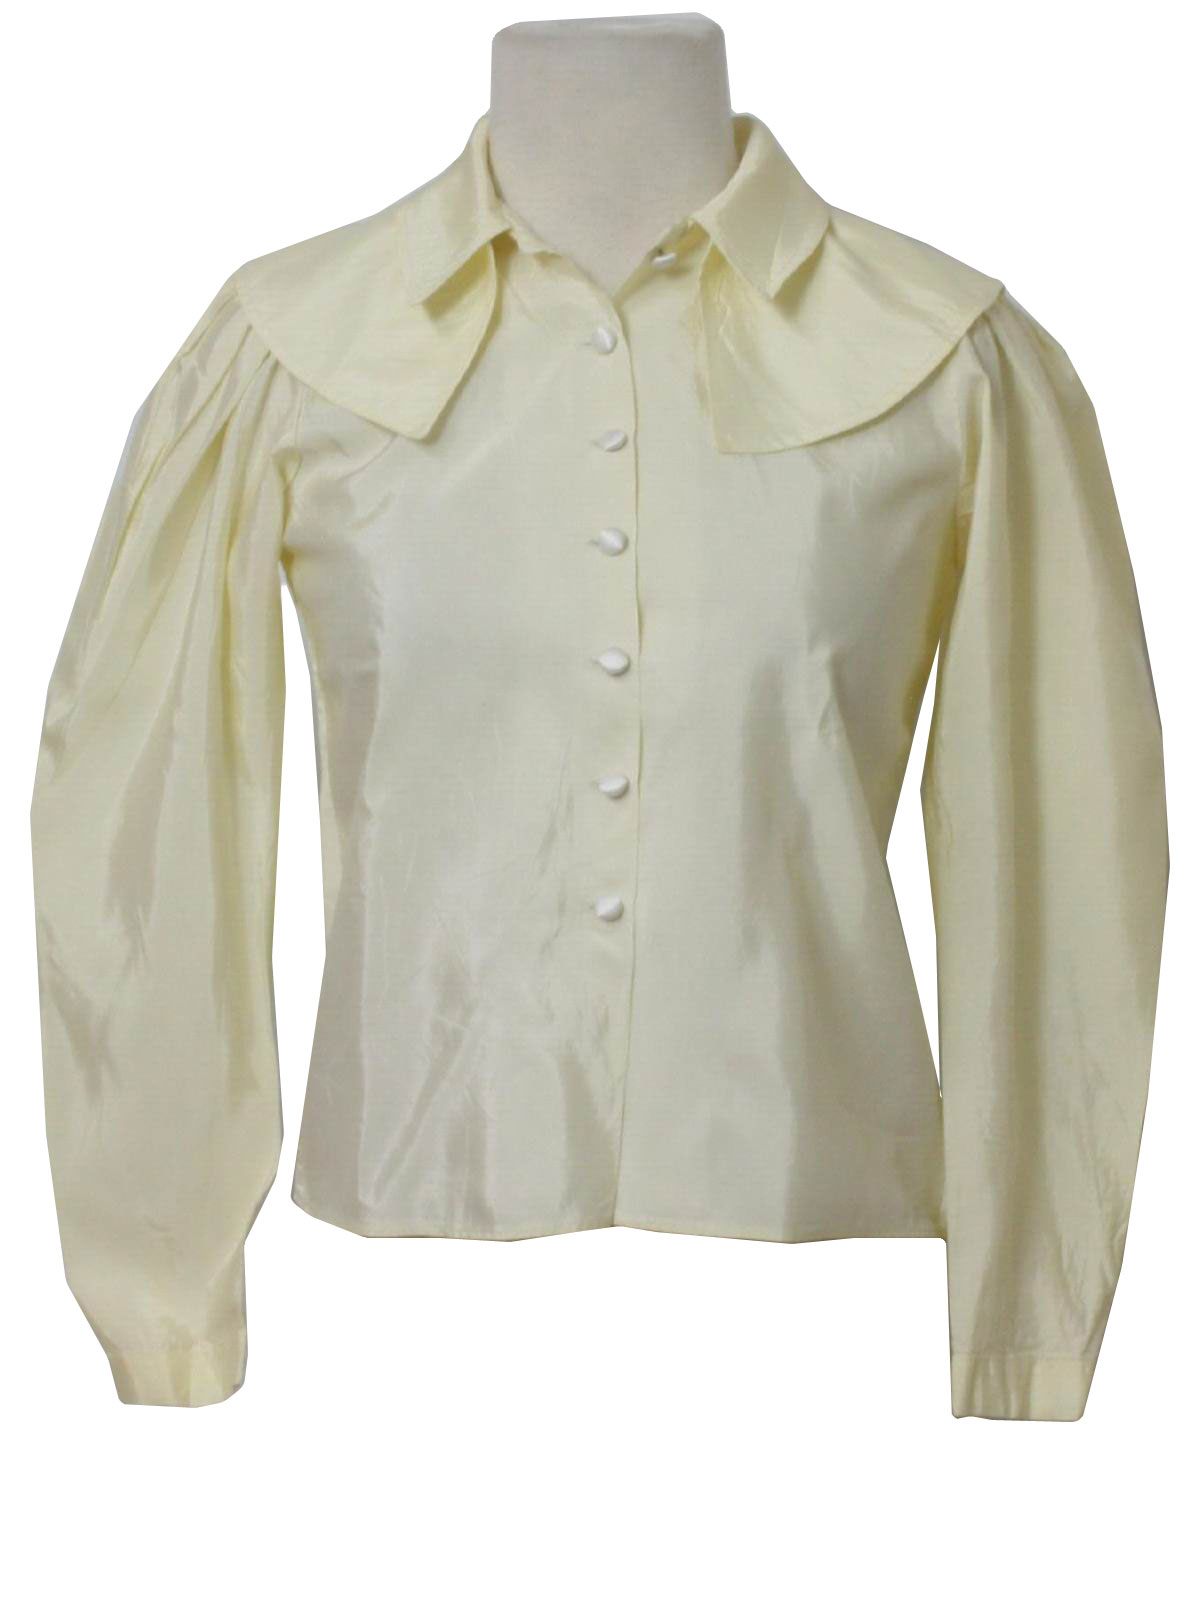 Retro 1950's Shirt (home sewn) : 50s -home sewn- Girls sheeny ivory ...